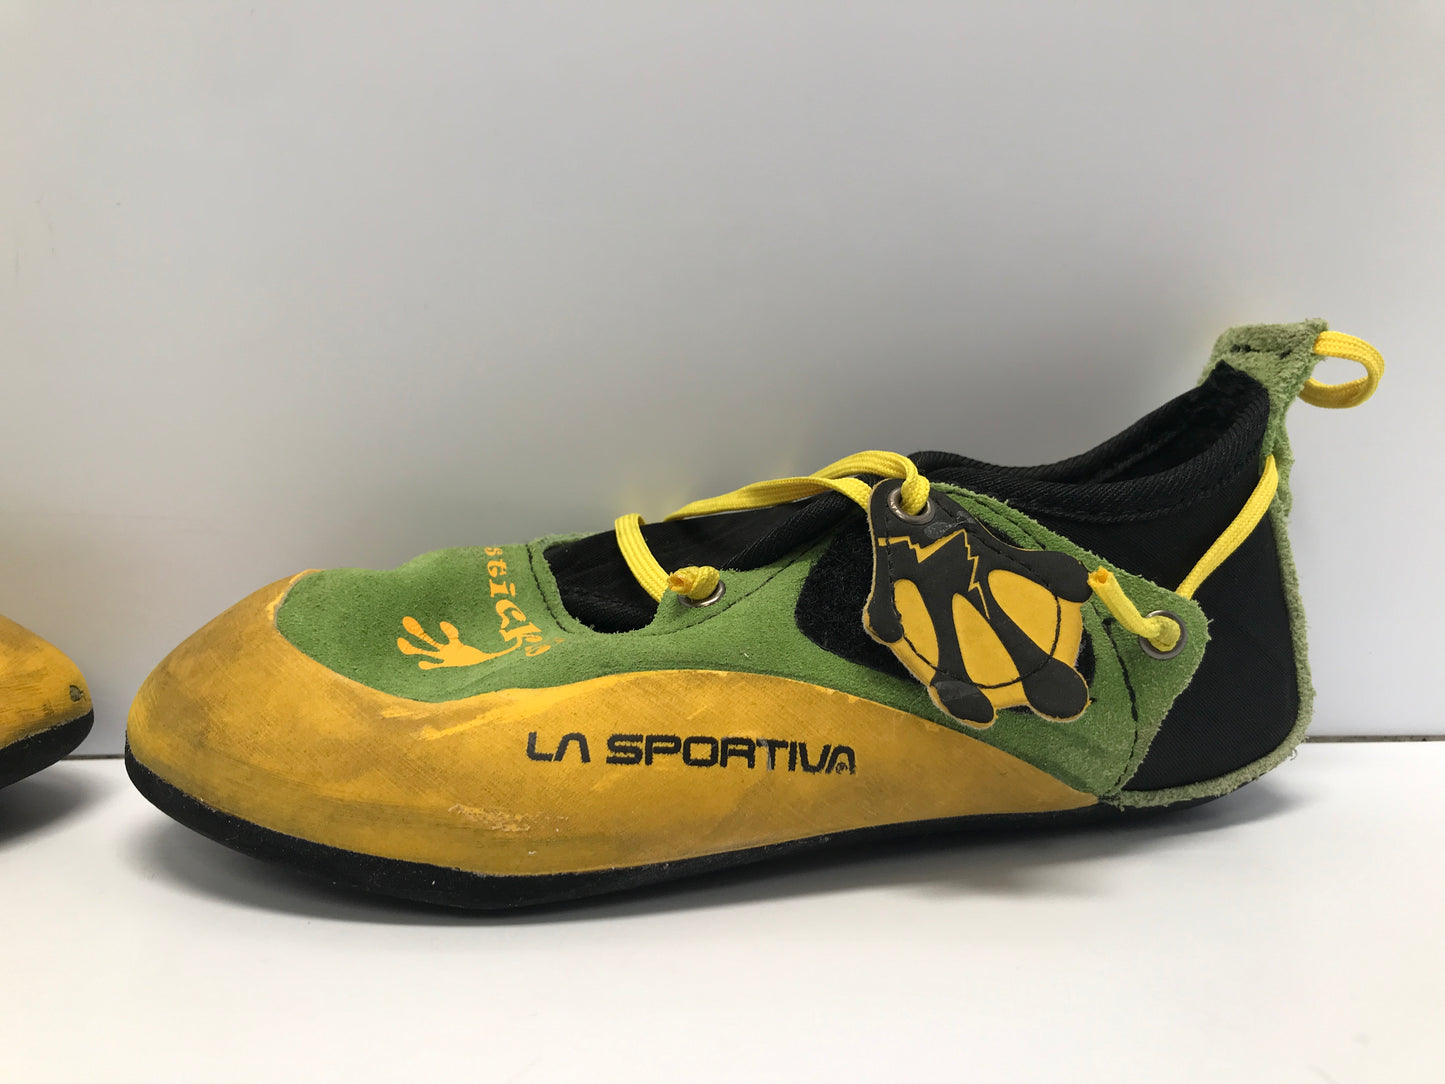 Rock Climbing Shoes Child Size 2-3 La Sportive Yellow Lime